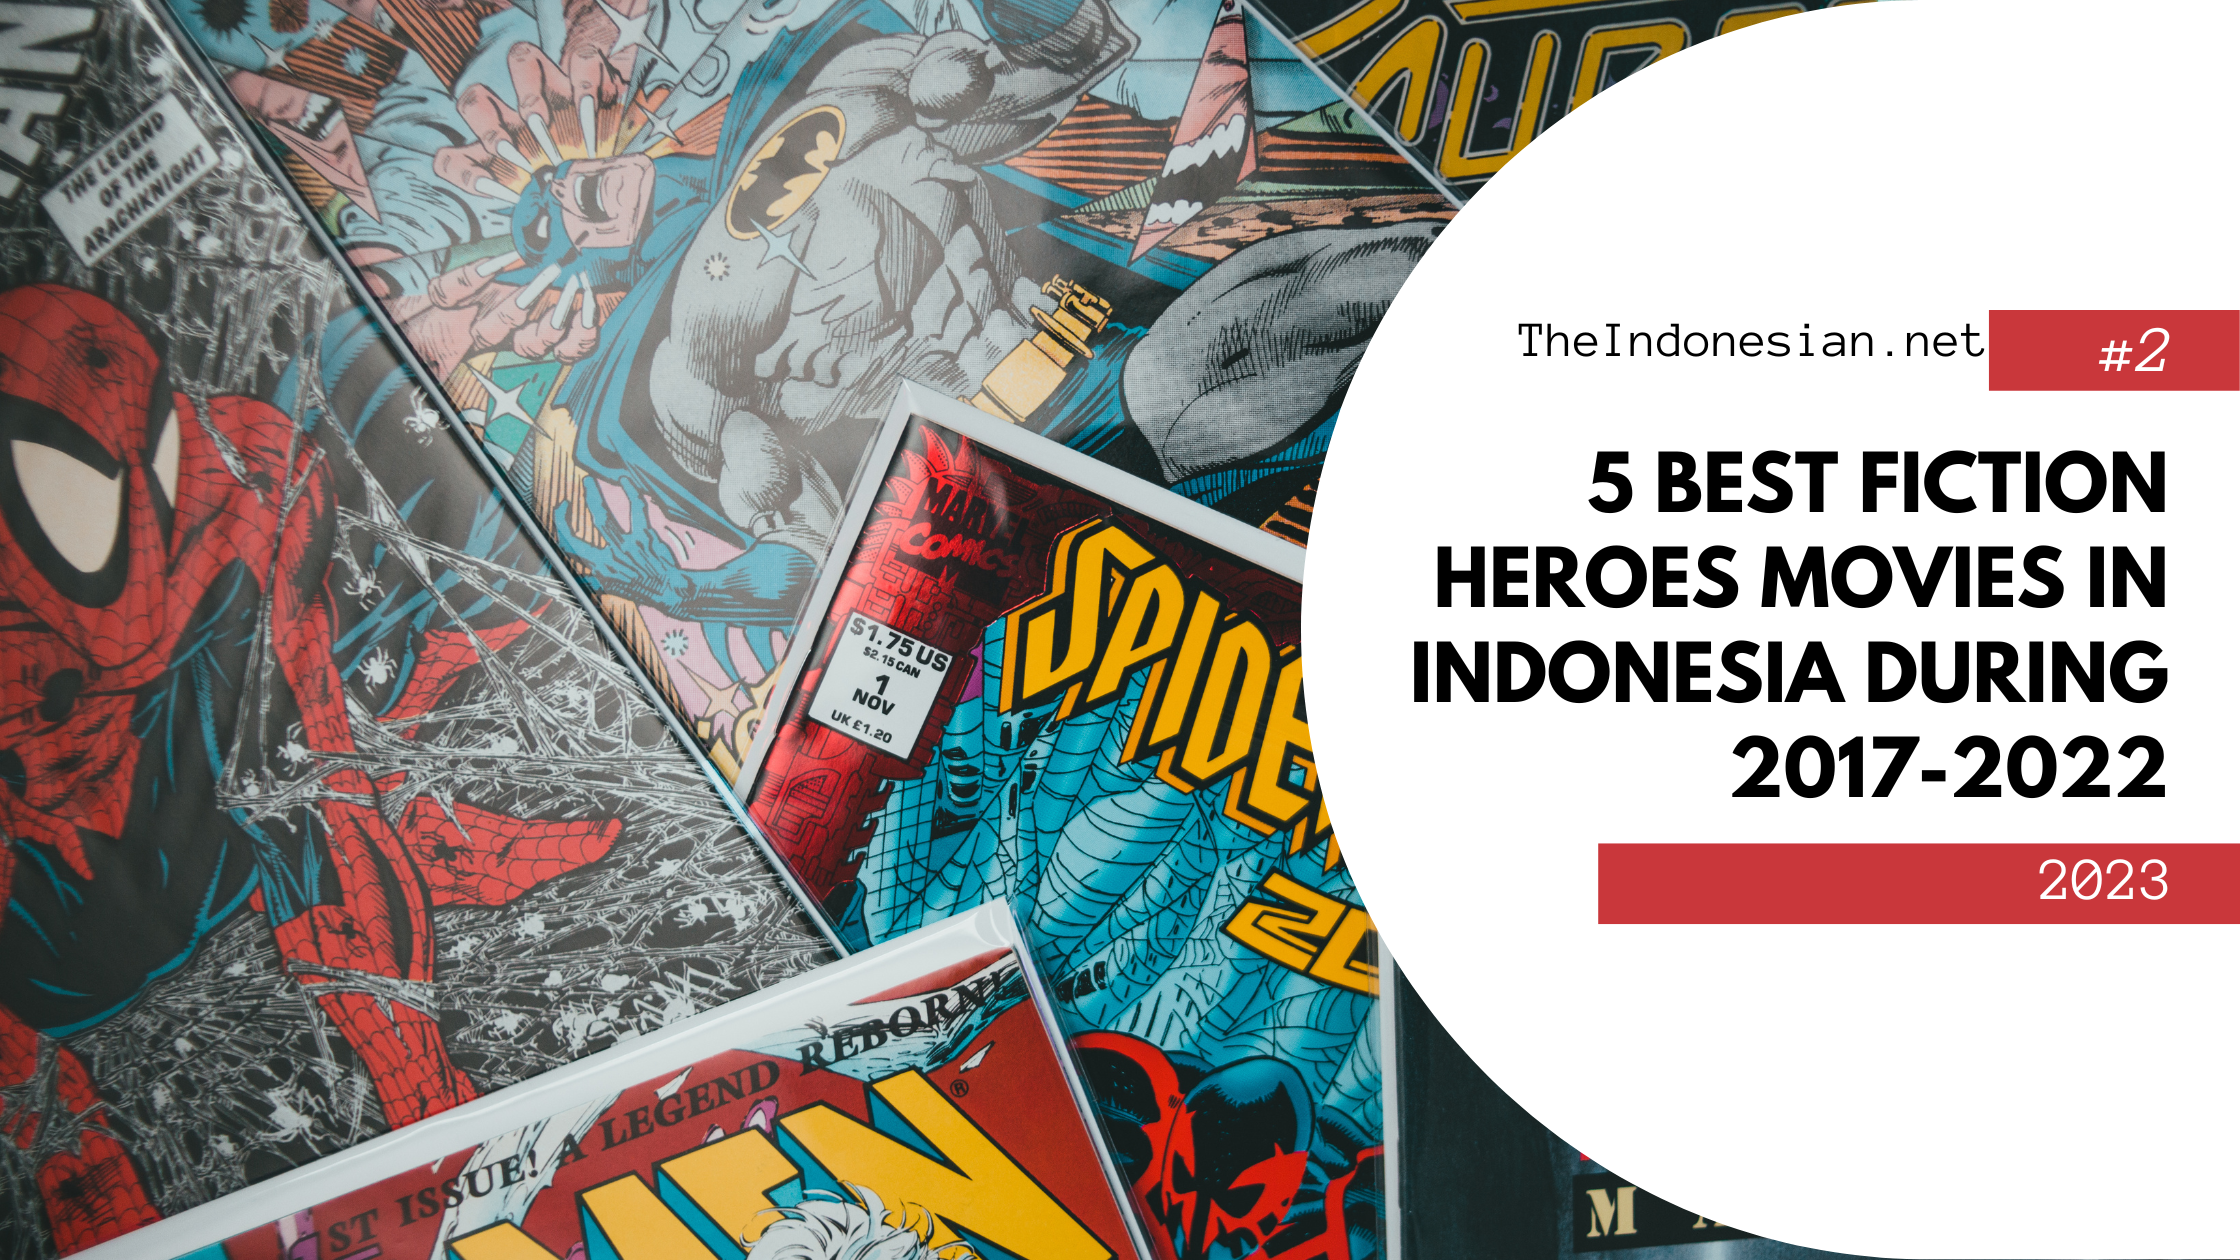 Superhero movies in Indonesia